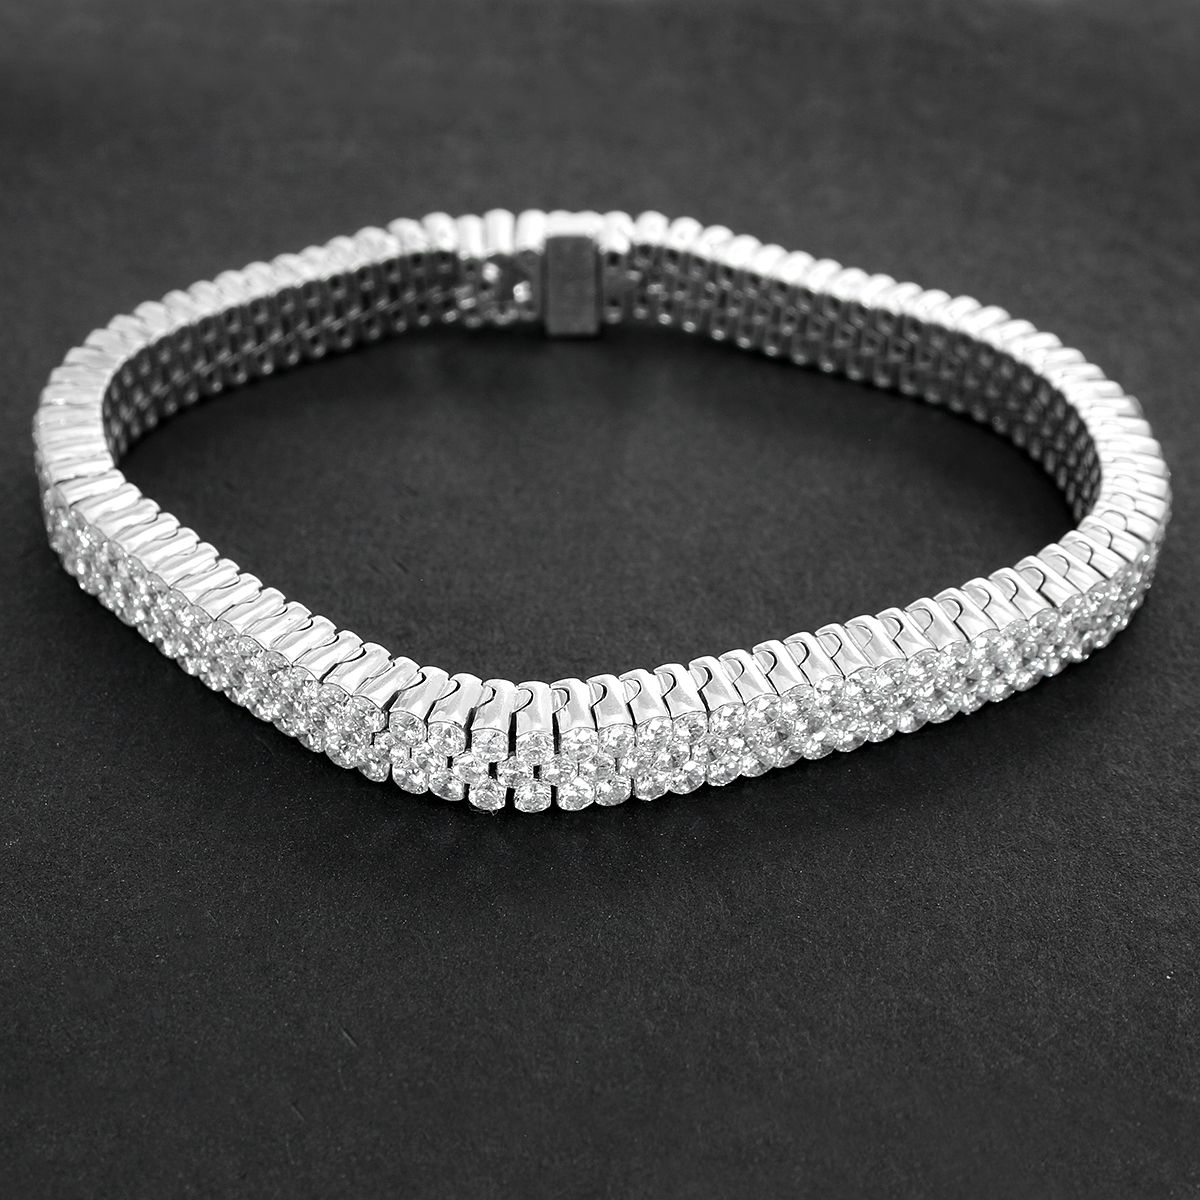 Luxury 44 carat 18k Gold 10 Rows Tennis Cuff Diamond Bracelet | eBay